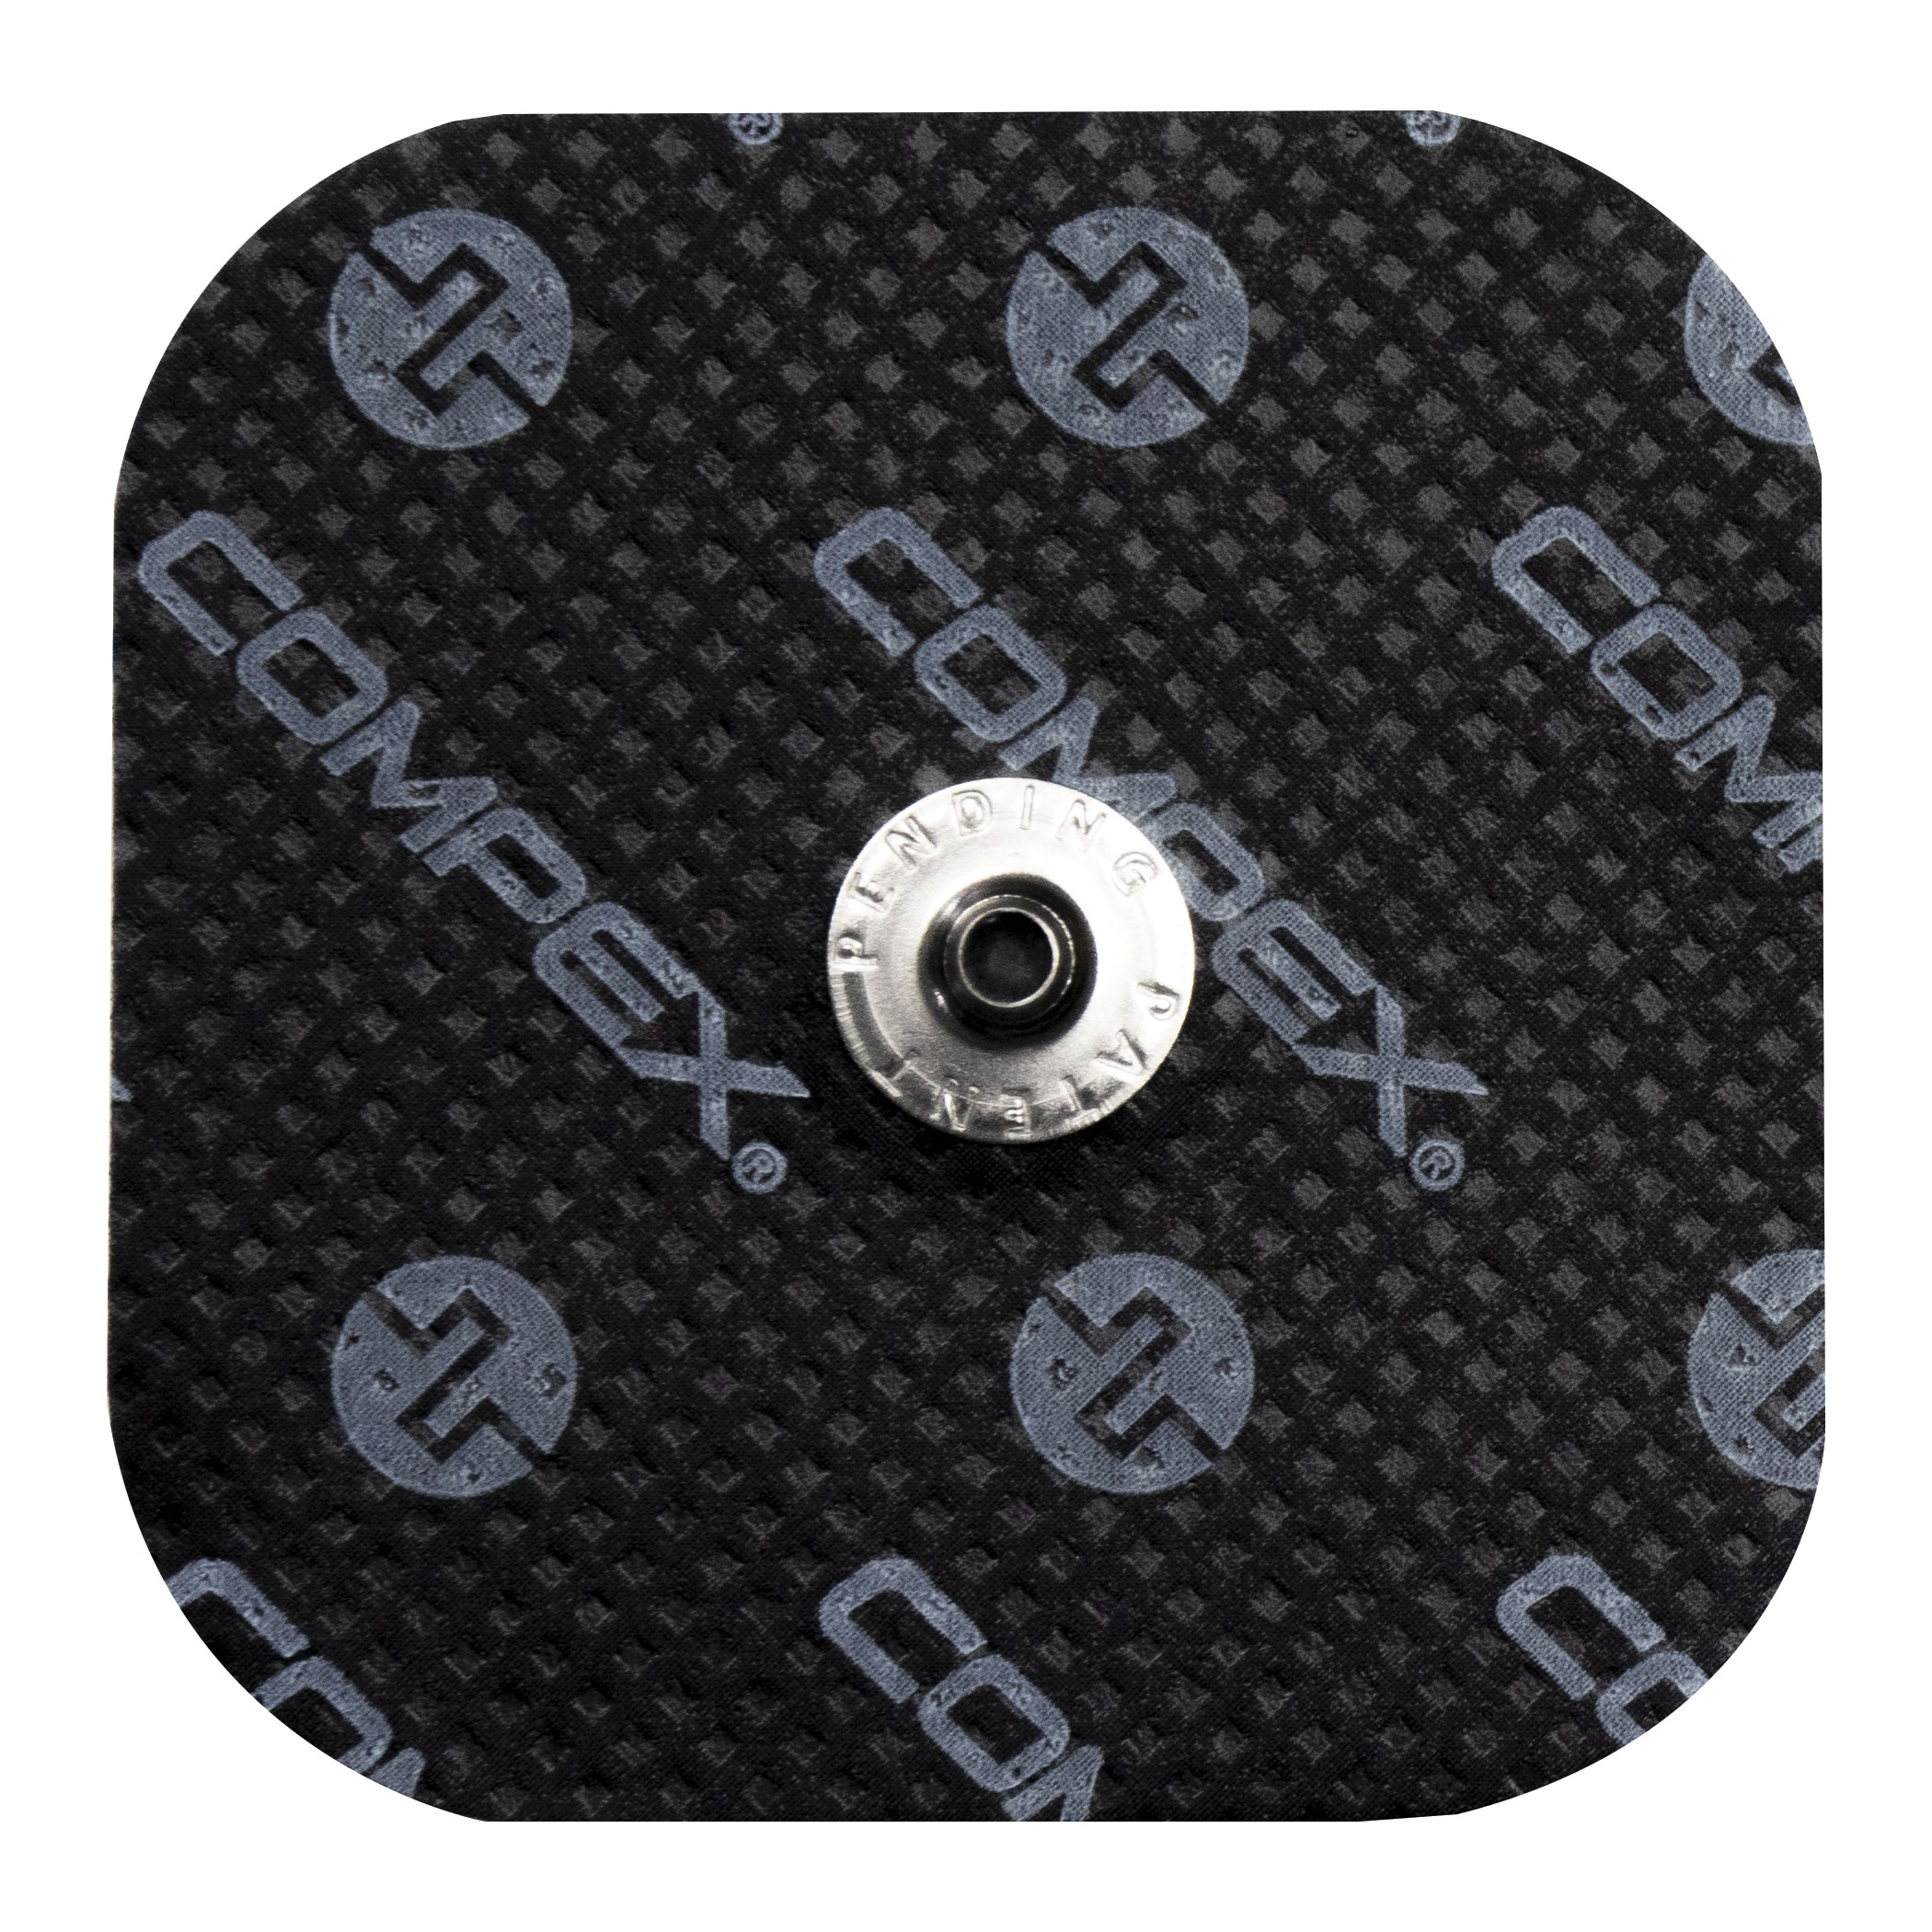 Easysnap elektrode zelfklevend - 2 connectors - Compex - 5 x 10 cm (2 st) - zwart